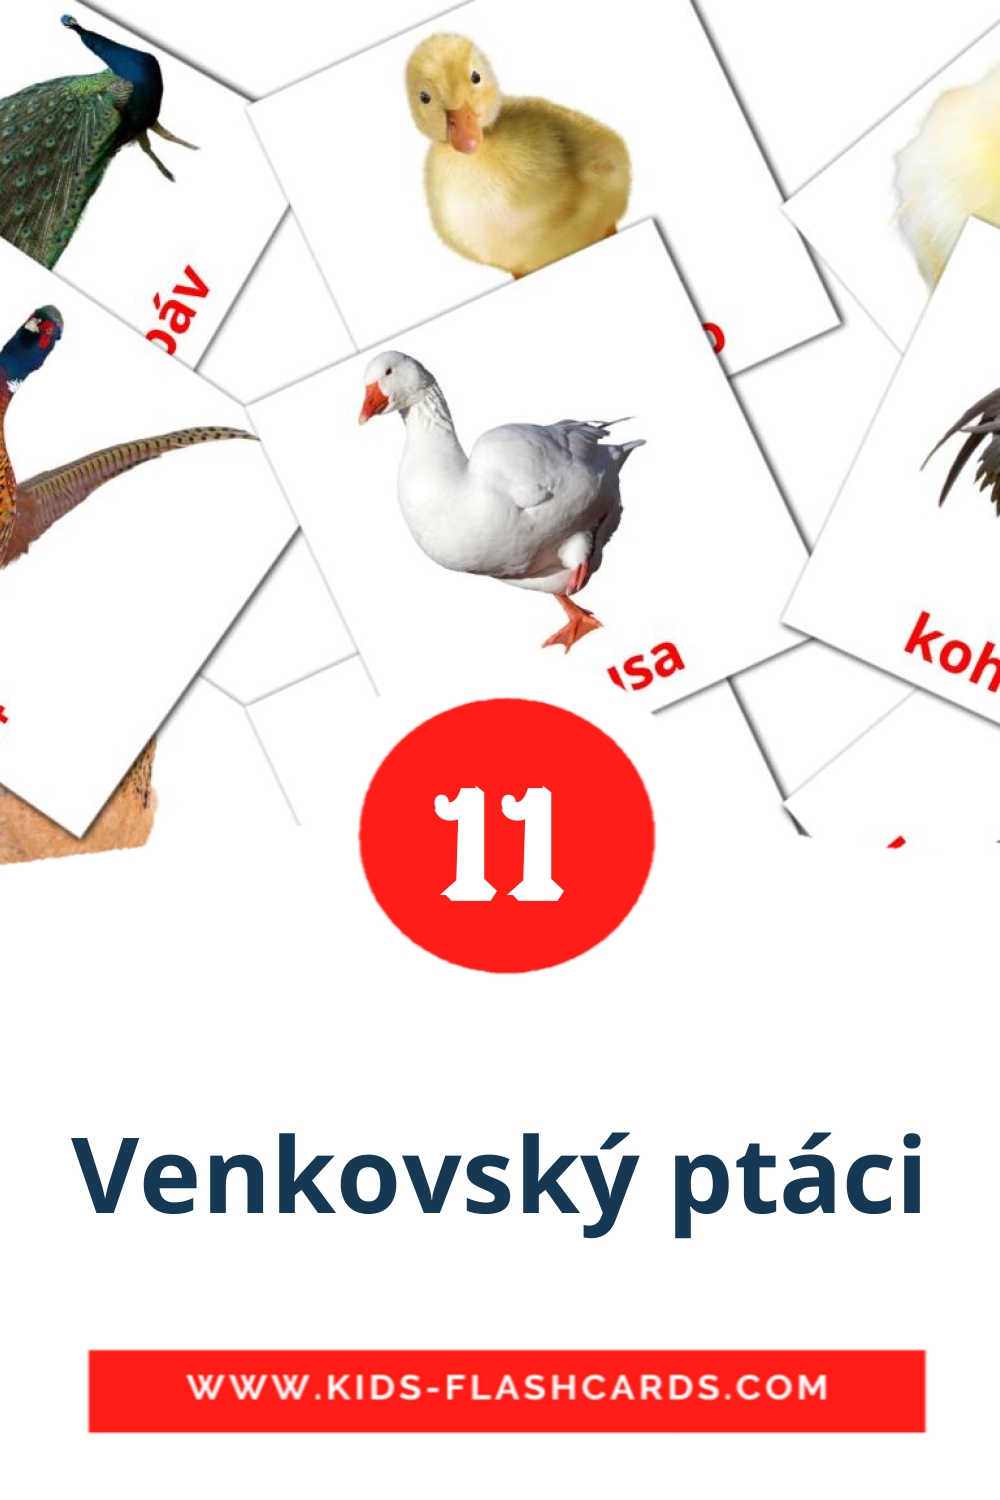 Venkovský ptáci на чешском для Детского Сада (11 карточек)